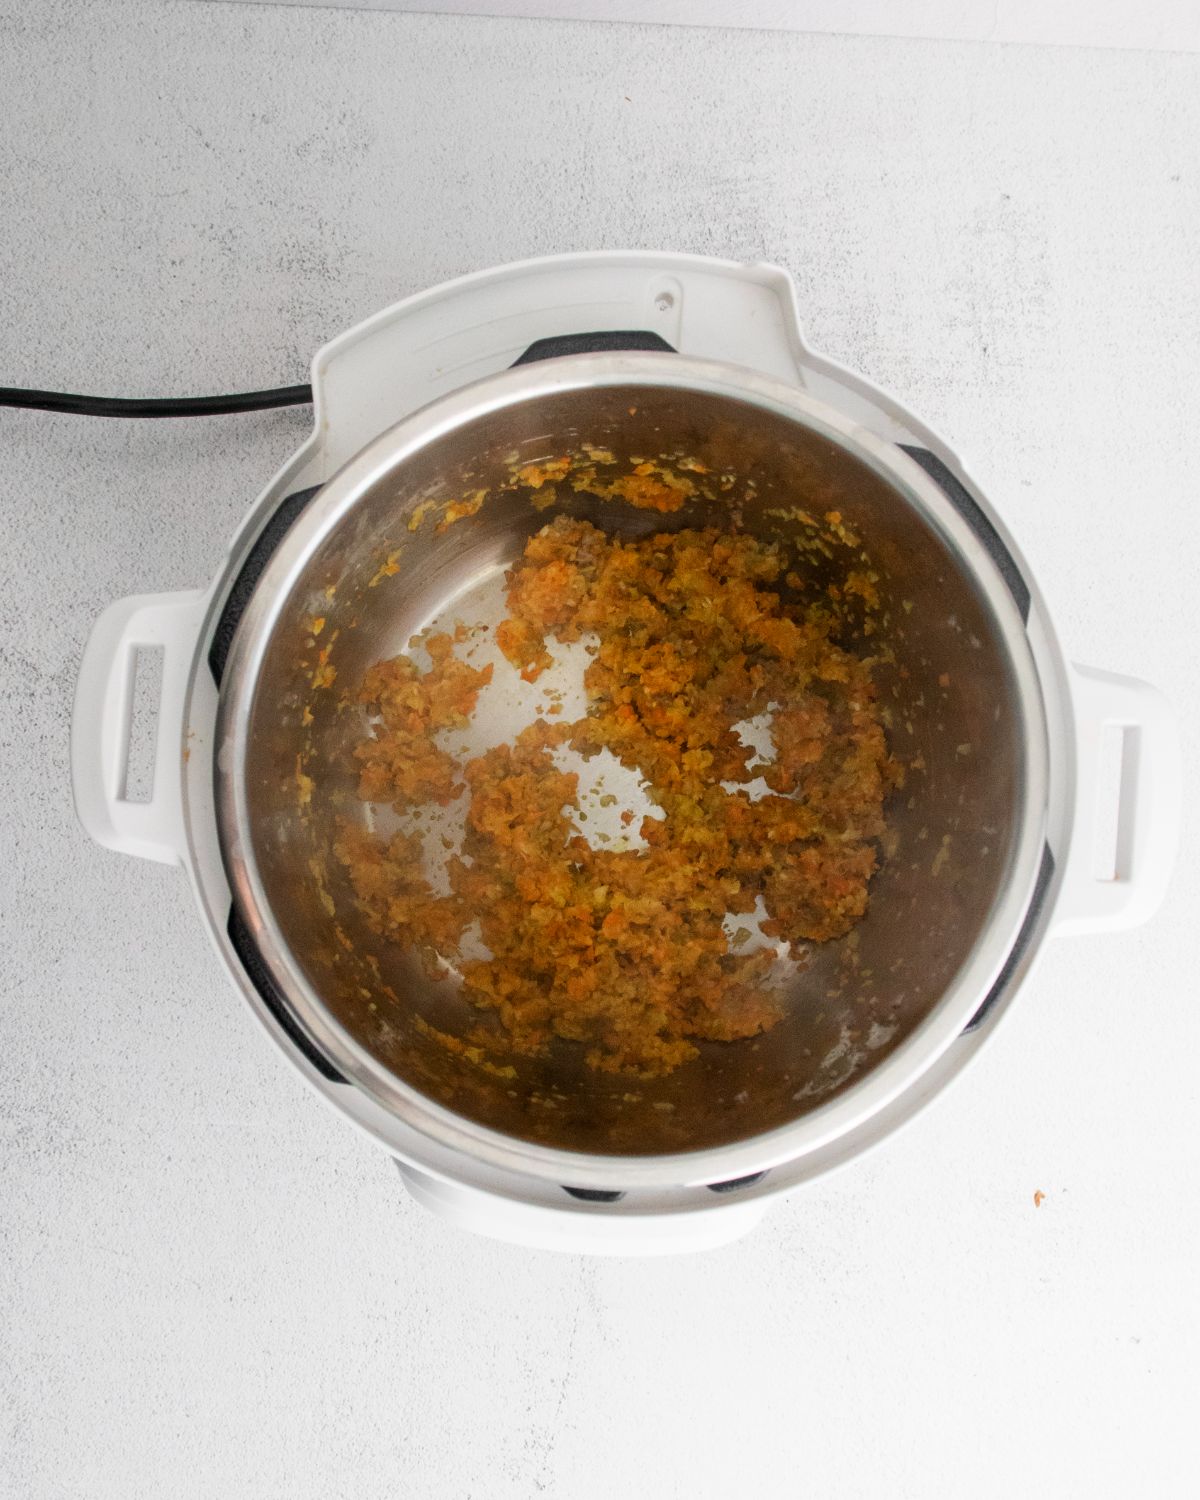 saute ground veggies inside the instant pot